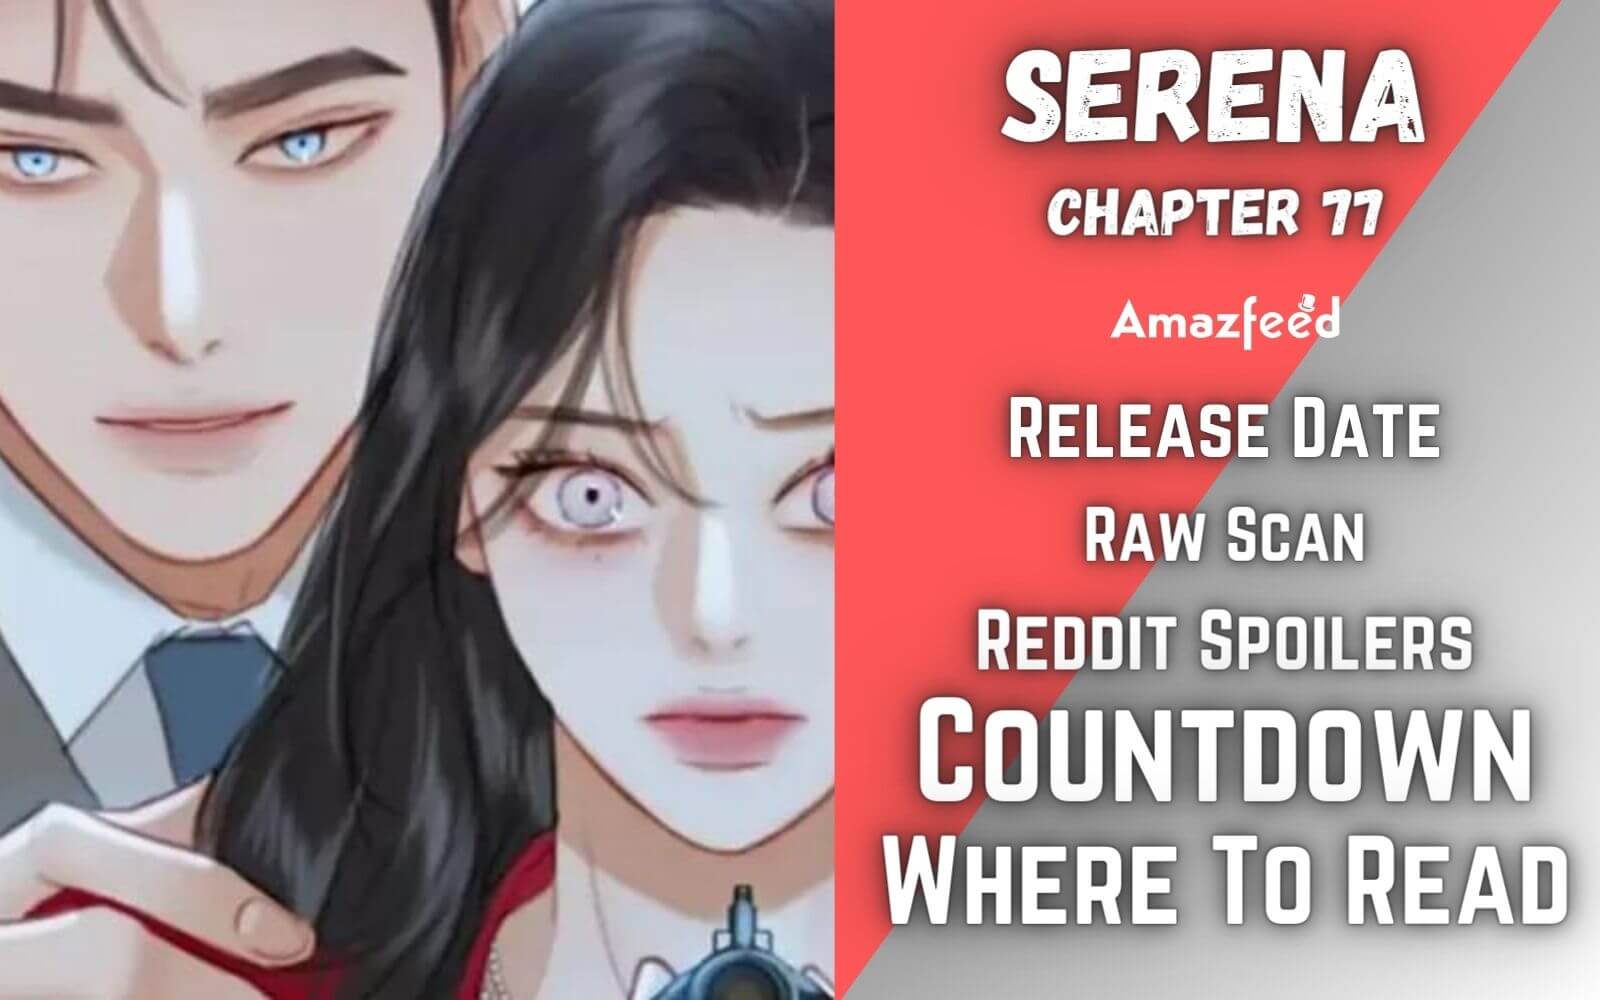 Serena Chapter 77